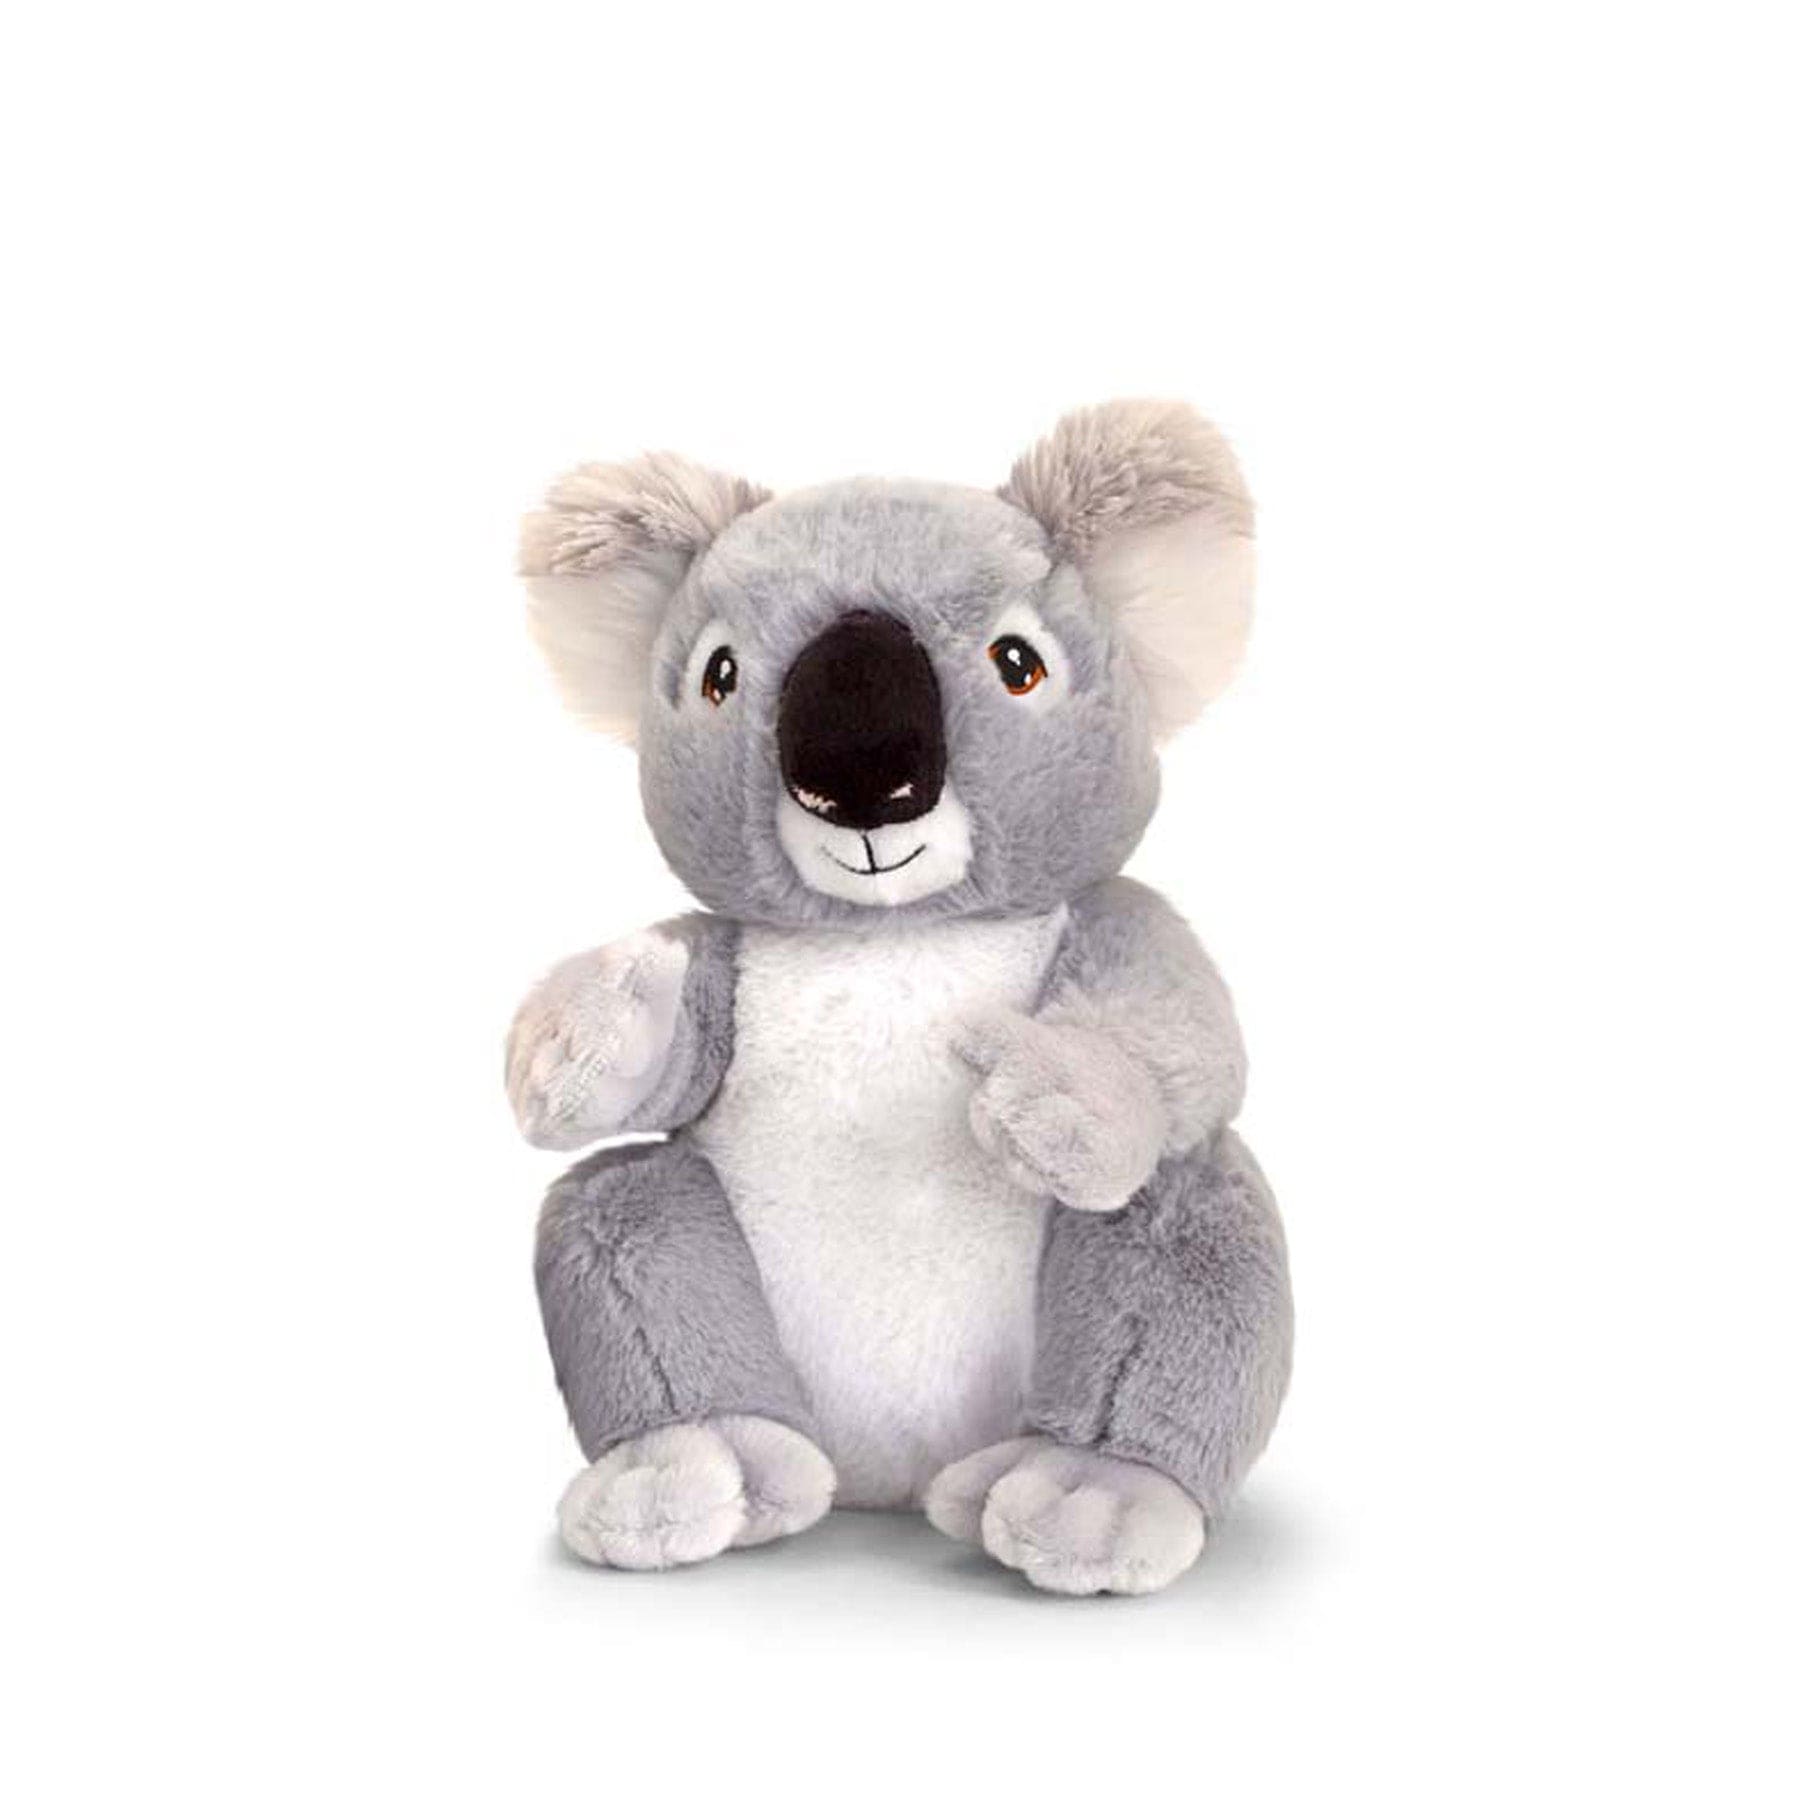 Plush koala toy sitting isolated on white background, cute stuffed animal, koala bear figure, soft toy for children, gray and white Australian marsupial.